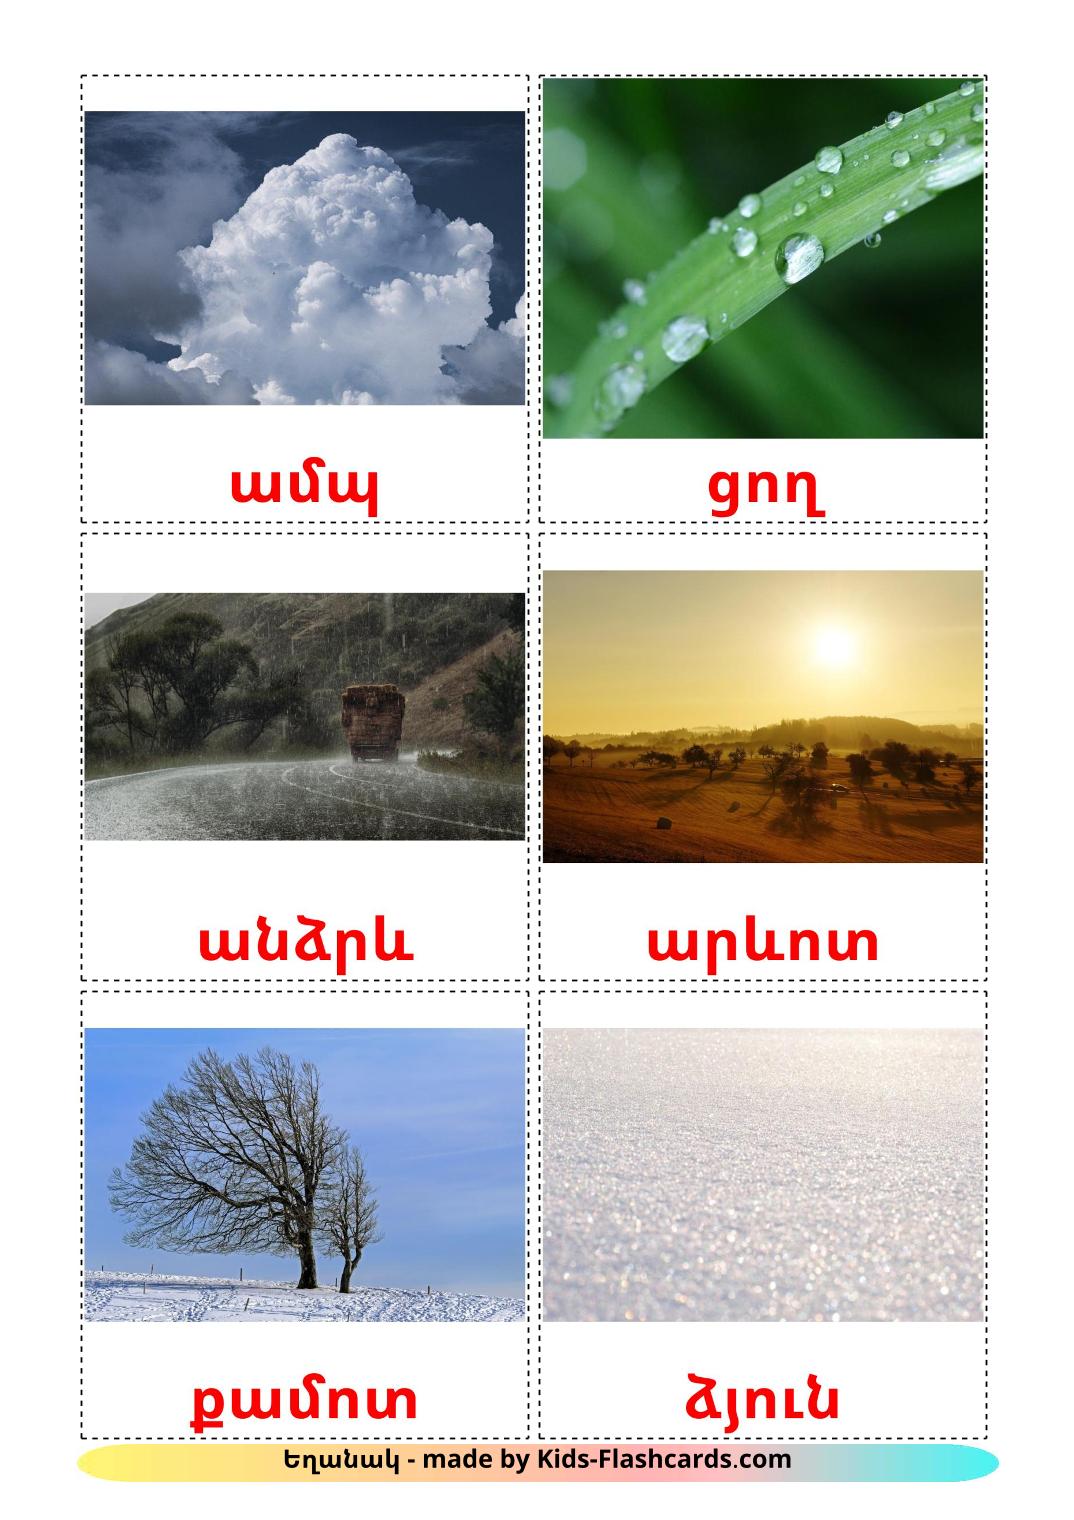 Tempo atmosferico - 31 flashcards armeno stampabili gratuitamente